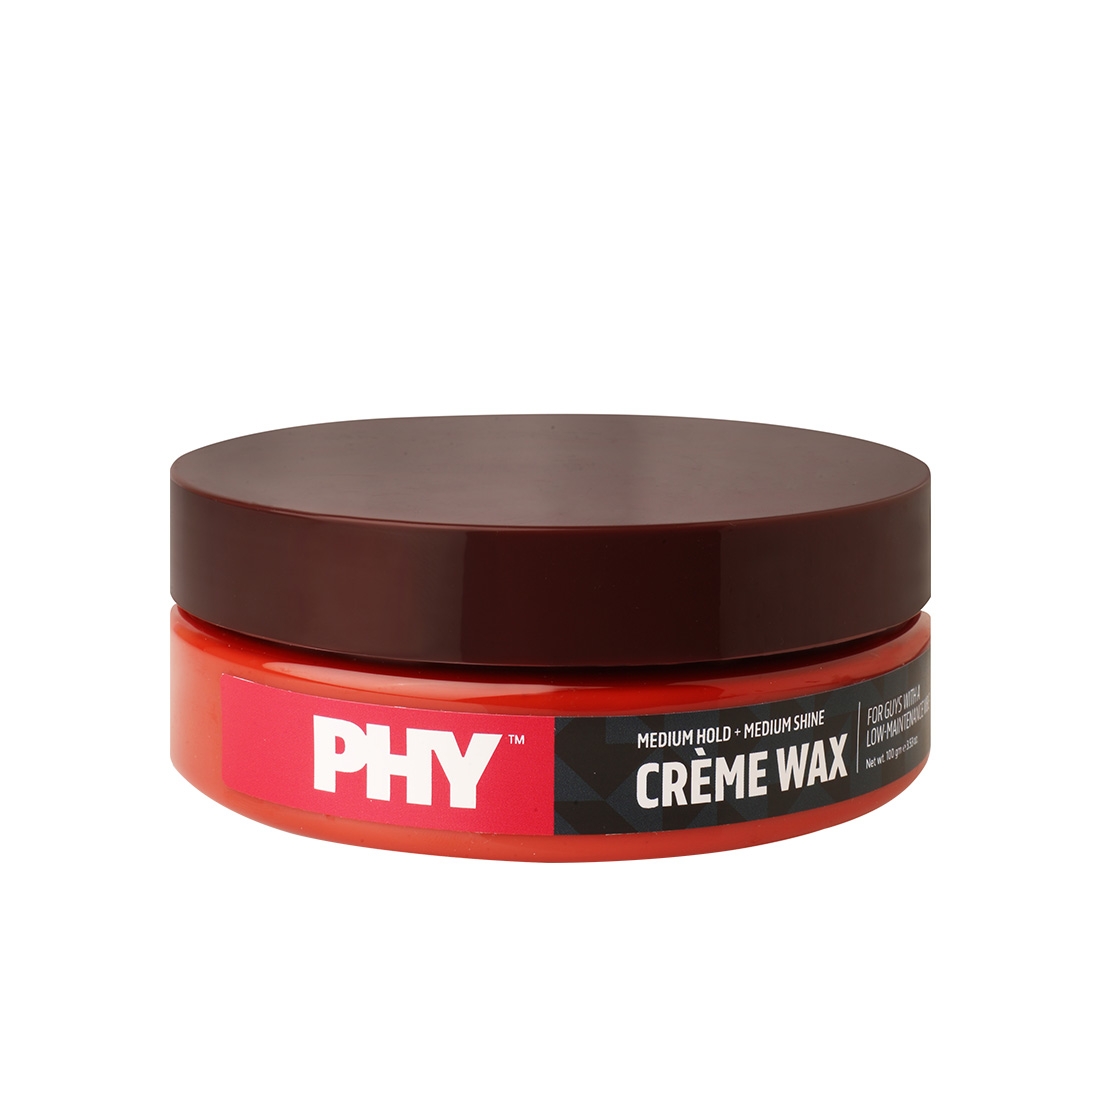 Phy | Phy Creme Wax | Medium Hold + Medium Shine